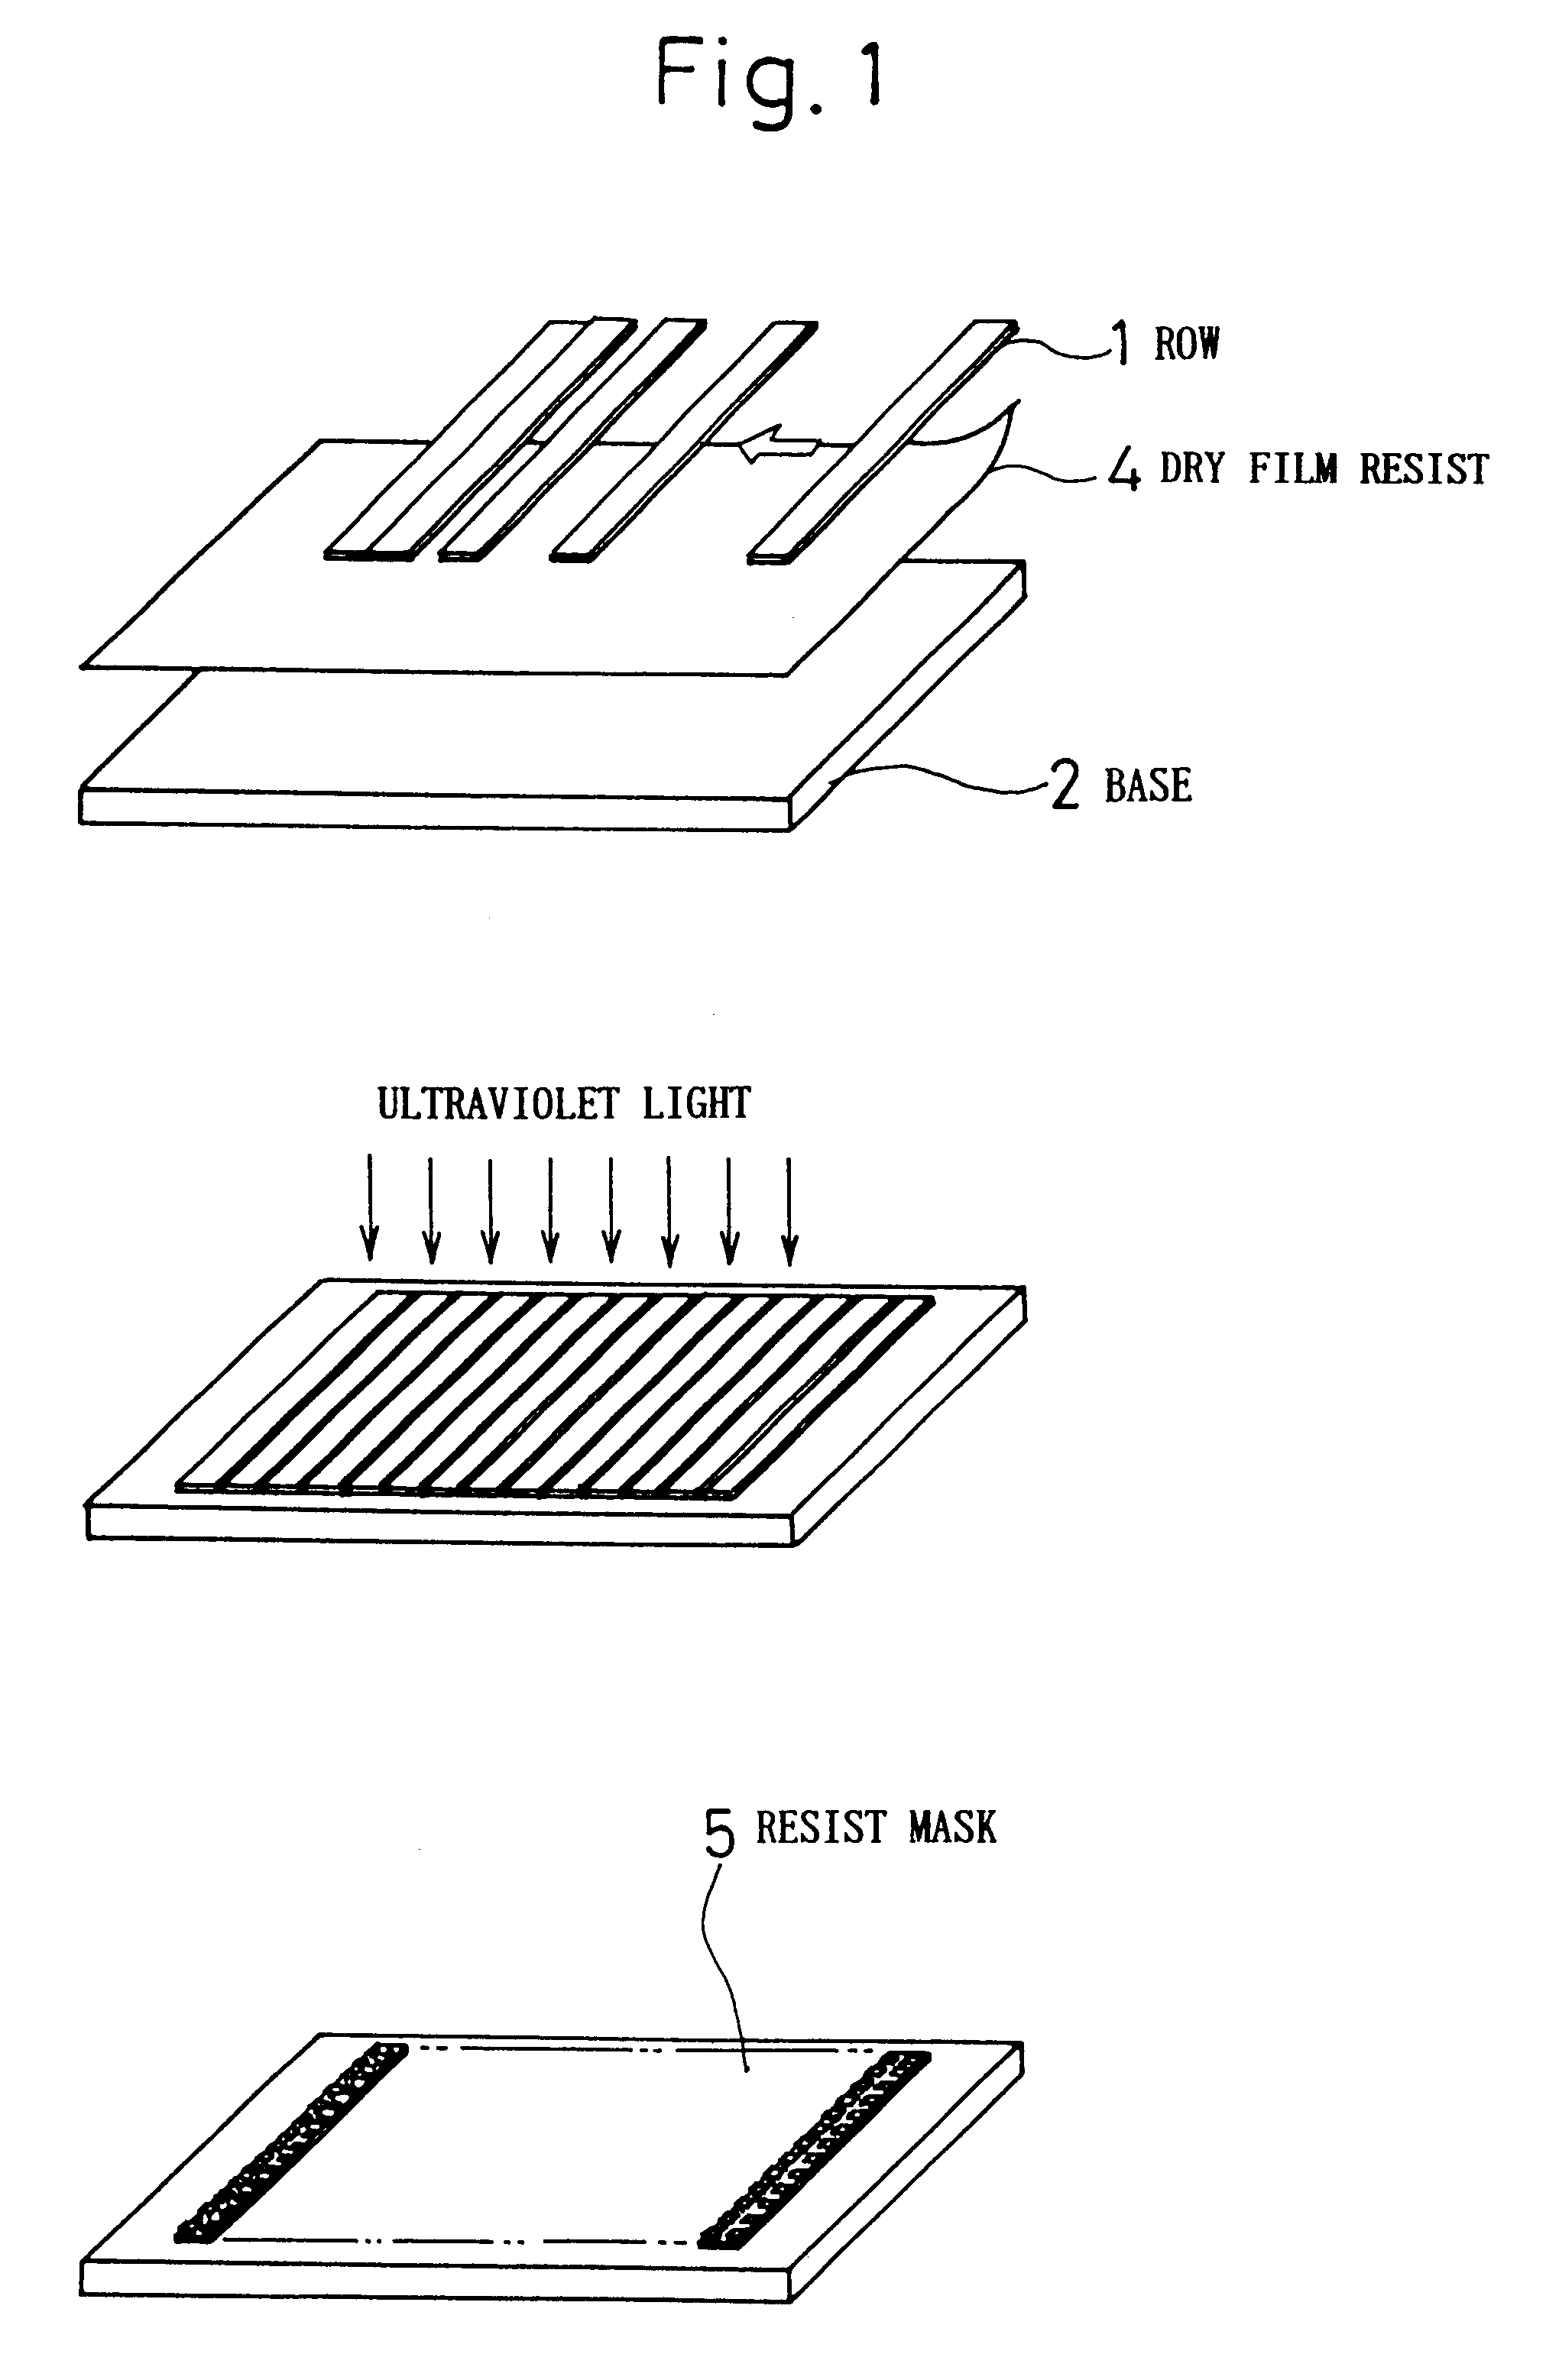 Magnetic head slider manufacturing method